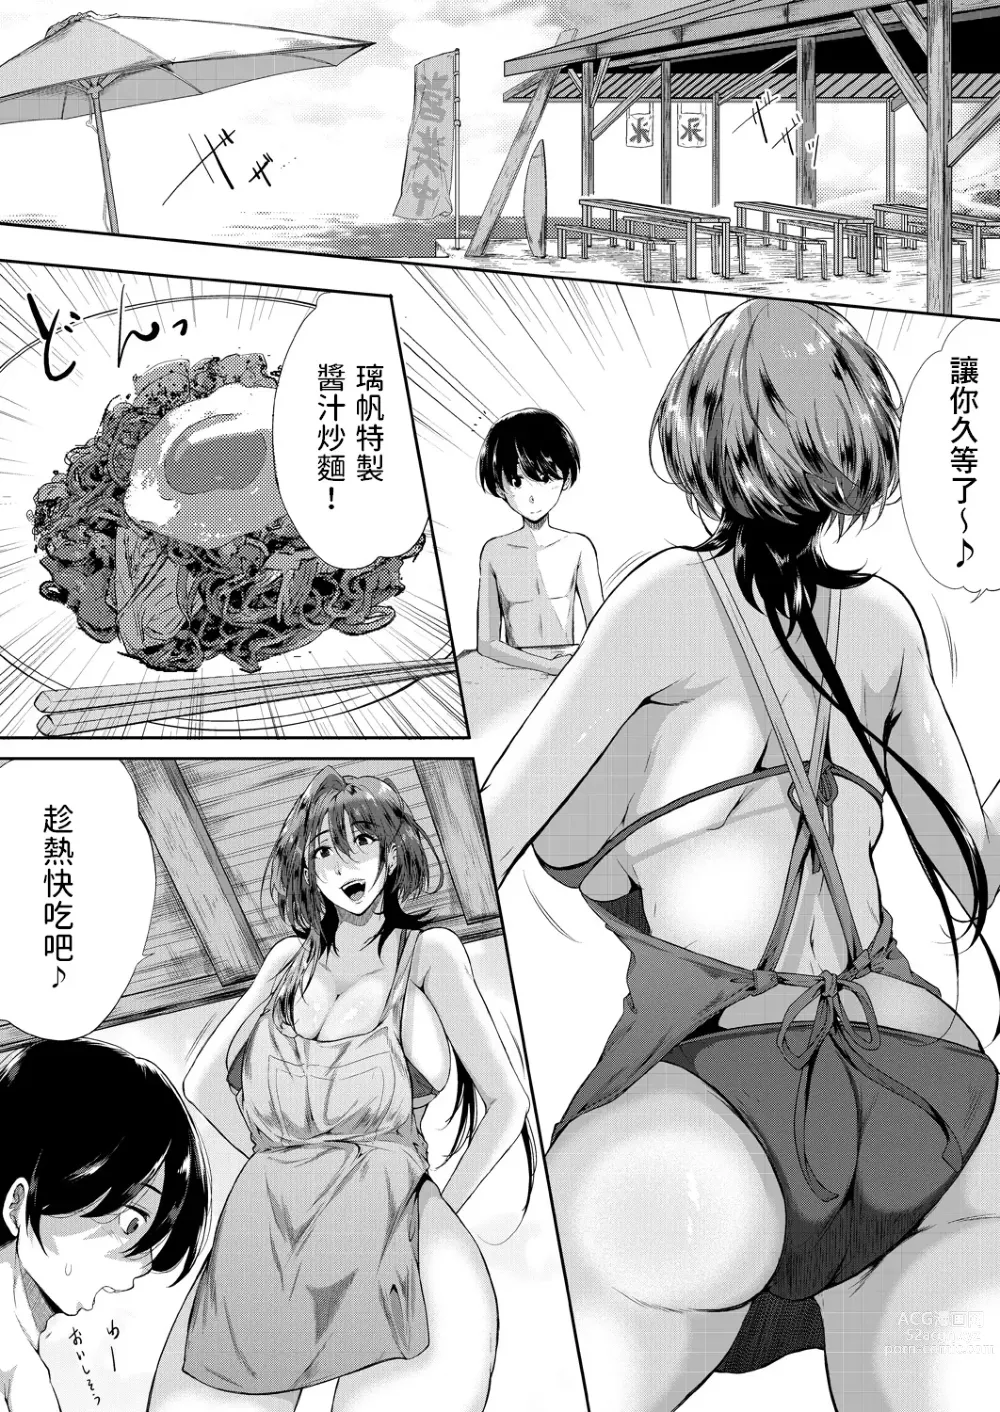 Page 6 of manga Strawberry Mermaid